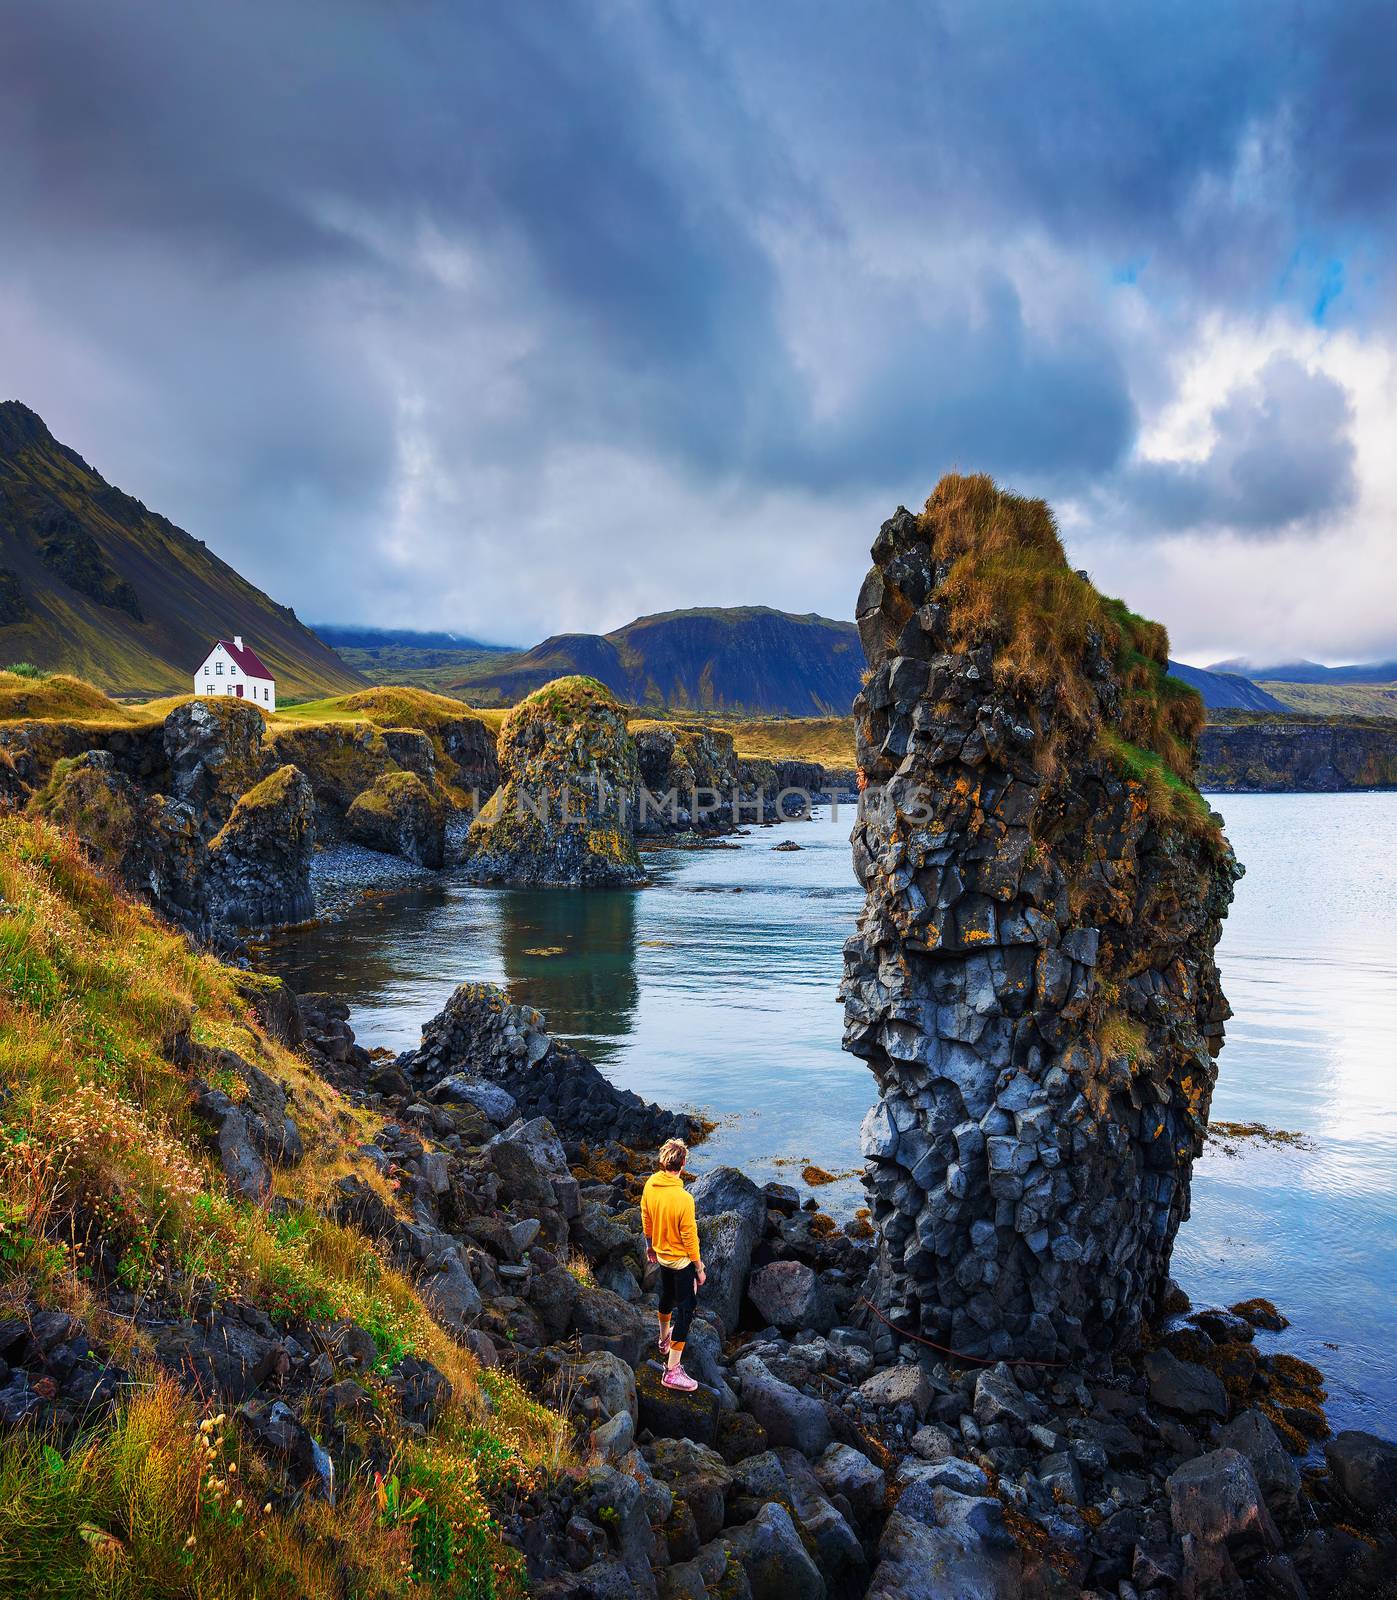 Tourist on a rocky beach looks at a small house in Arnarstapi, Iceland by nickfox